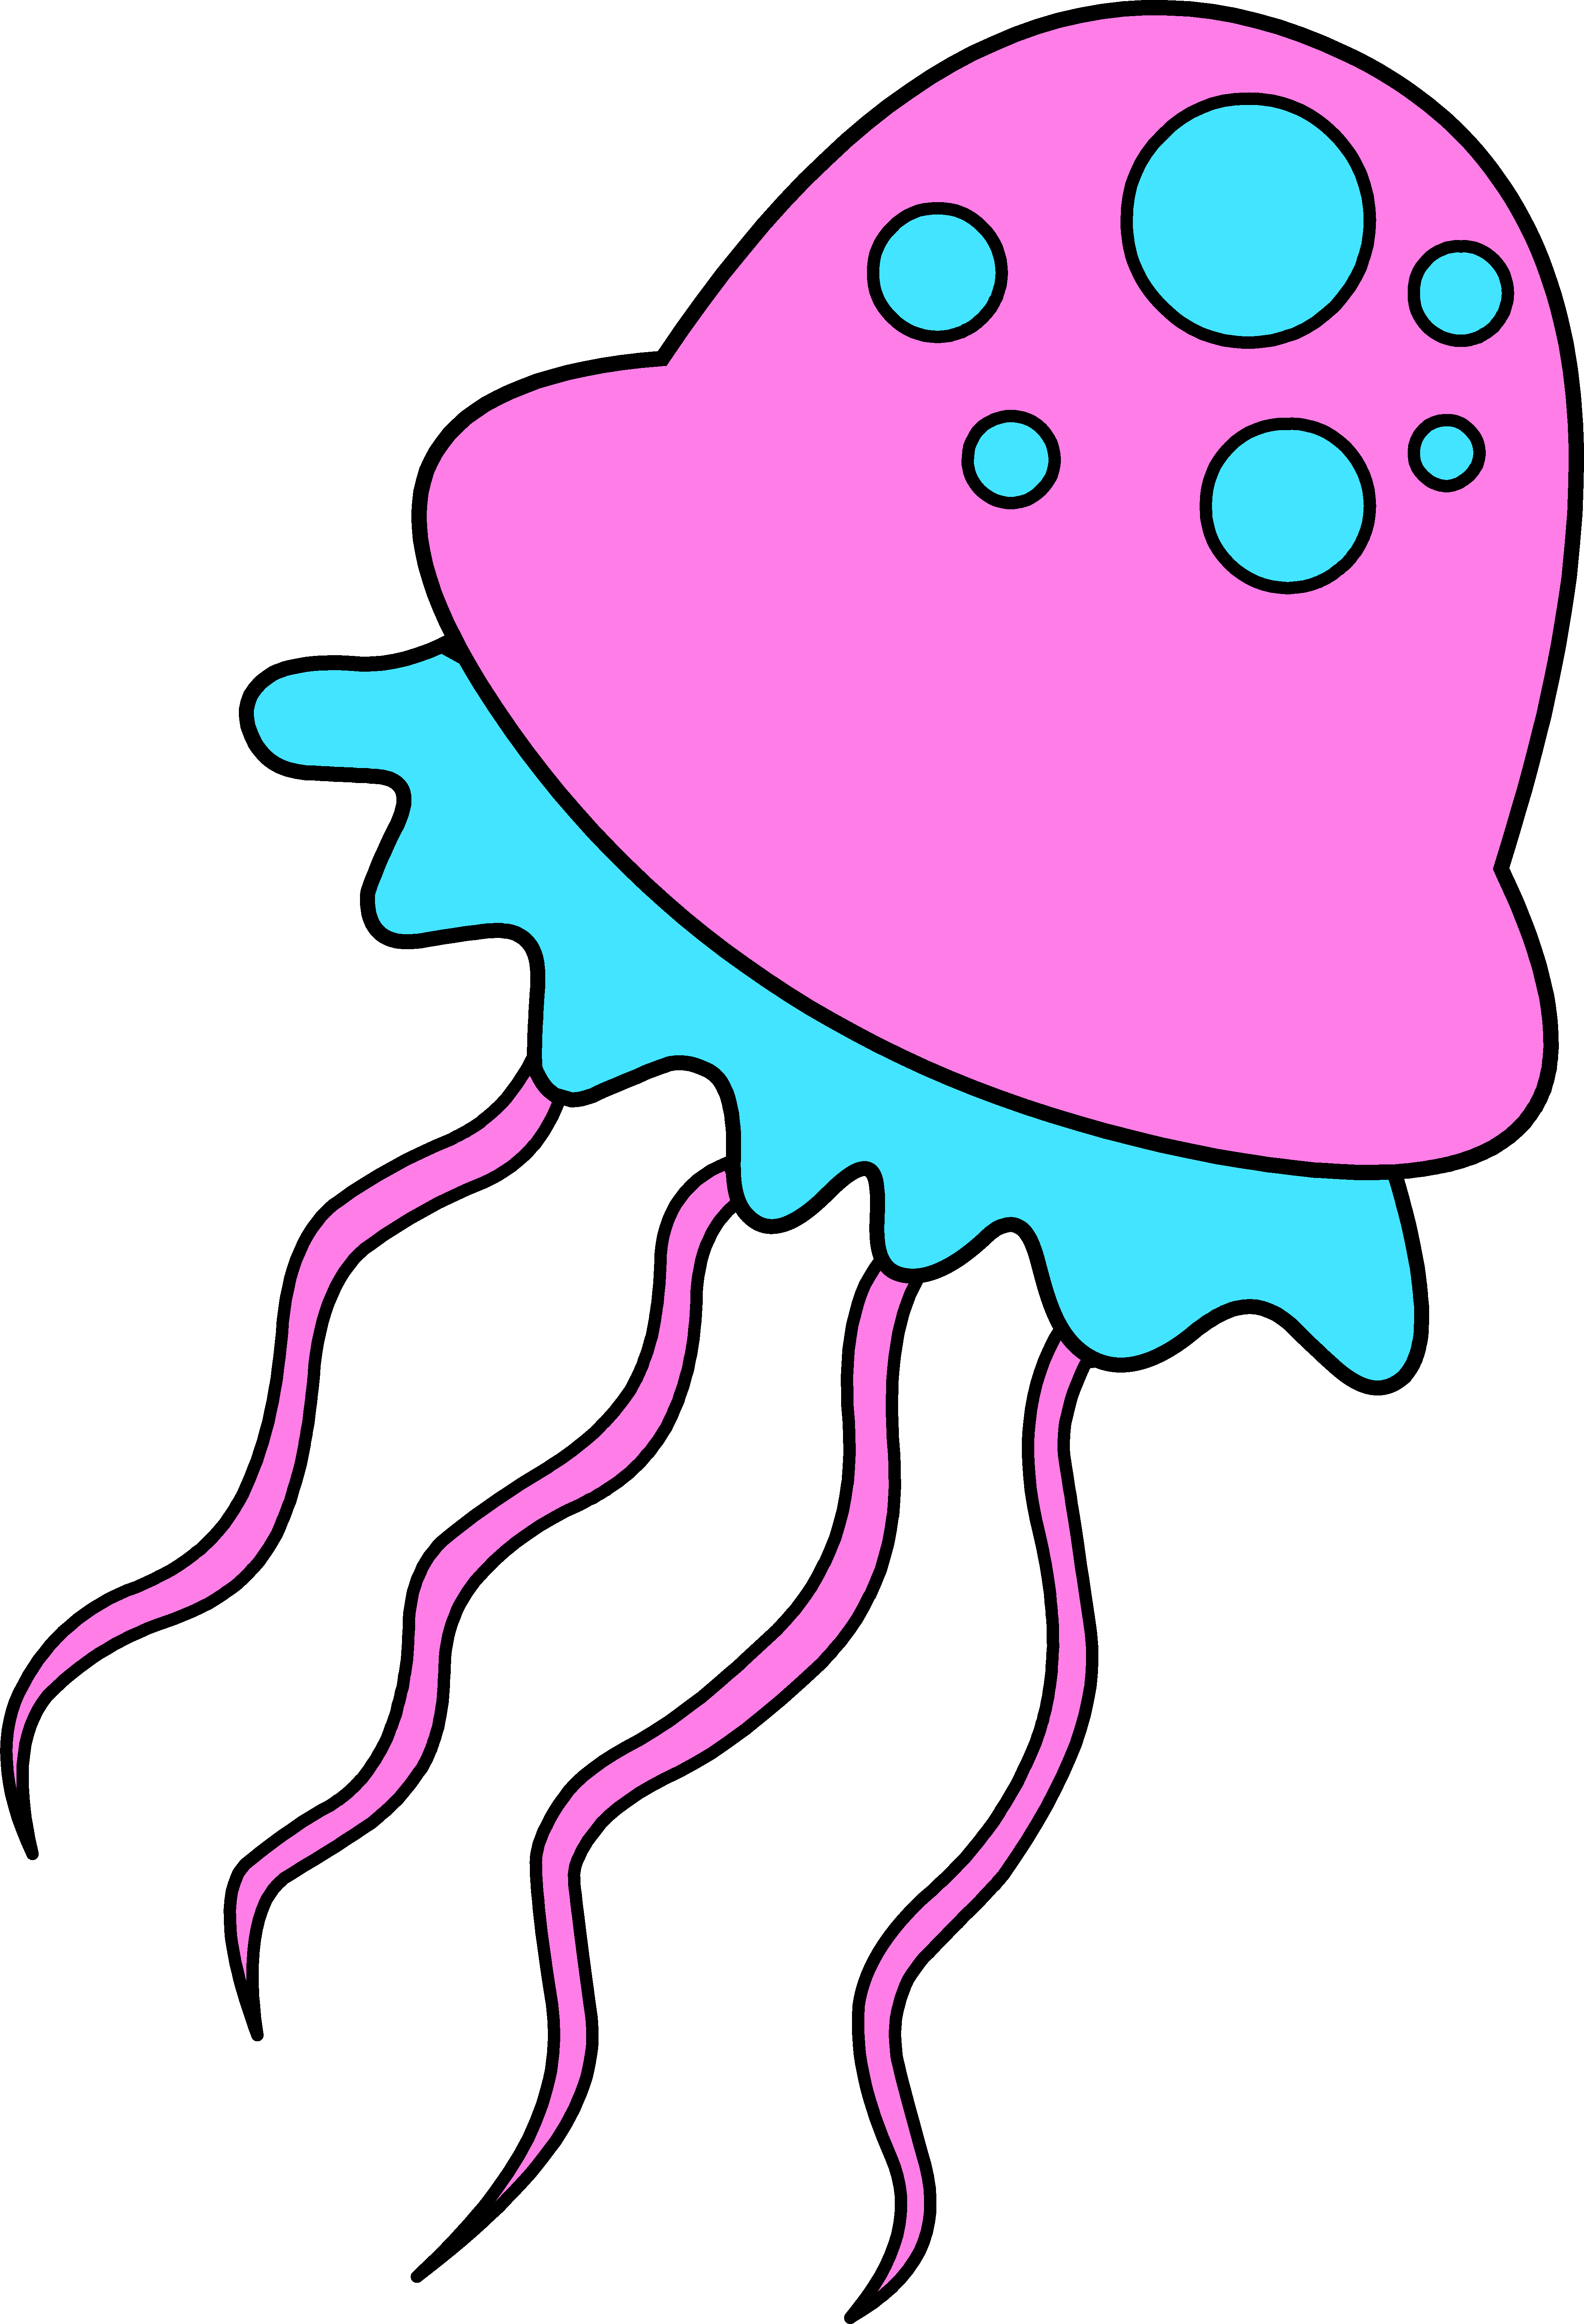 圖片:jellyfish clipart | 精彩圖片搜